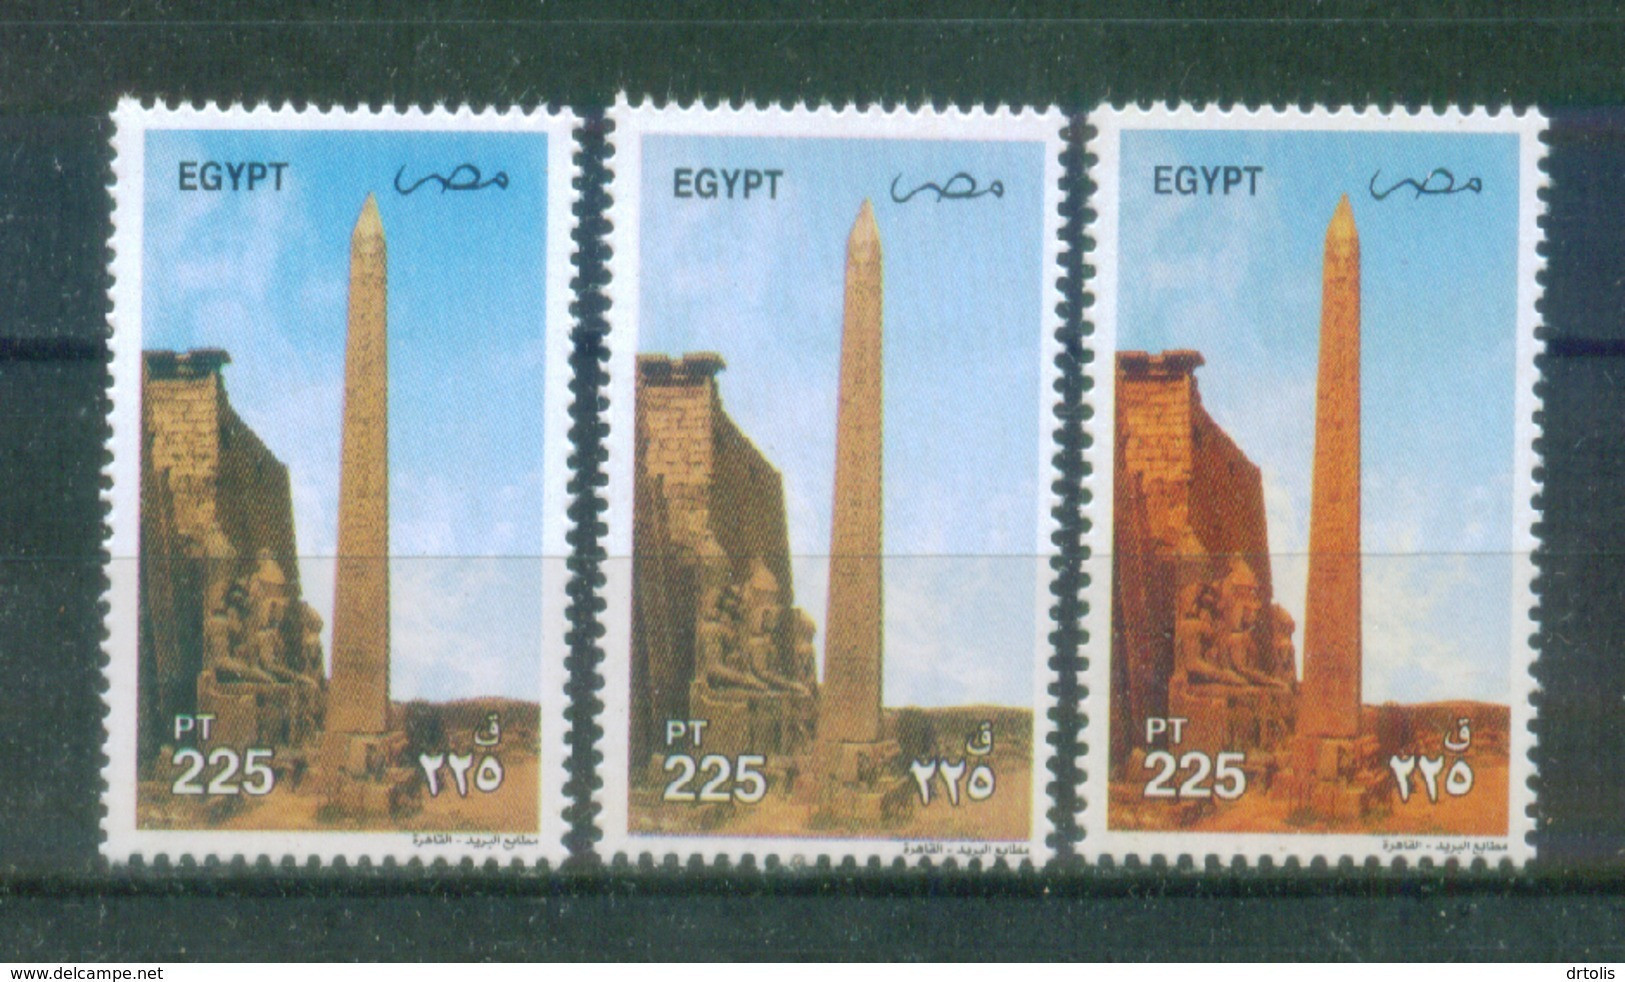 EGYPT / 2002 / RAMESES II OBELISK ; LUXOR / 3 DIFFERENT ISSUES / EGYPTOLOGY / ARCHEOLOGY / EGYPT ANTIQUITY / MNH - Neufs